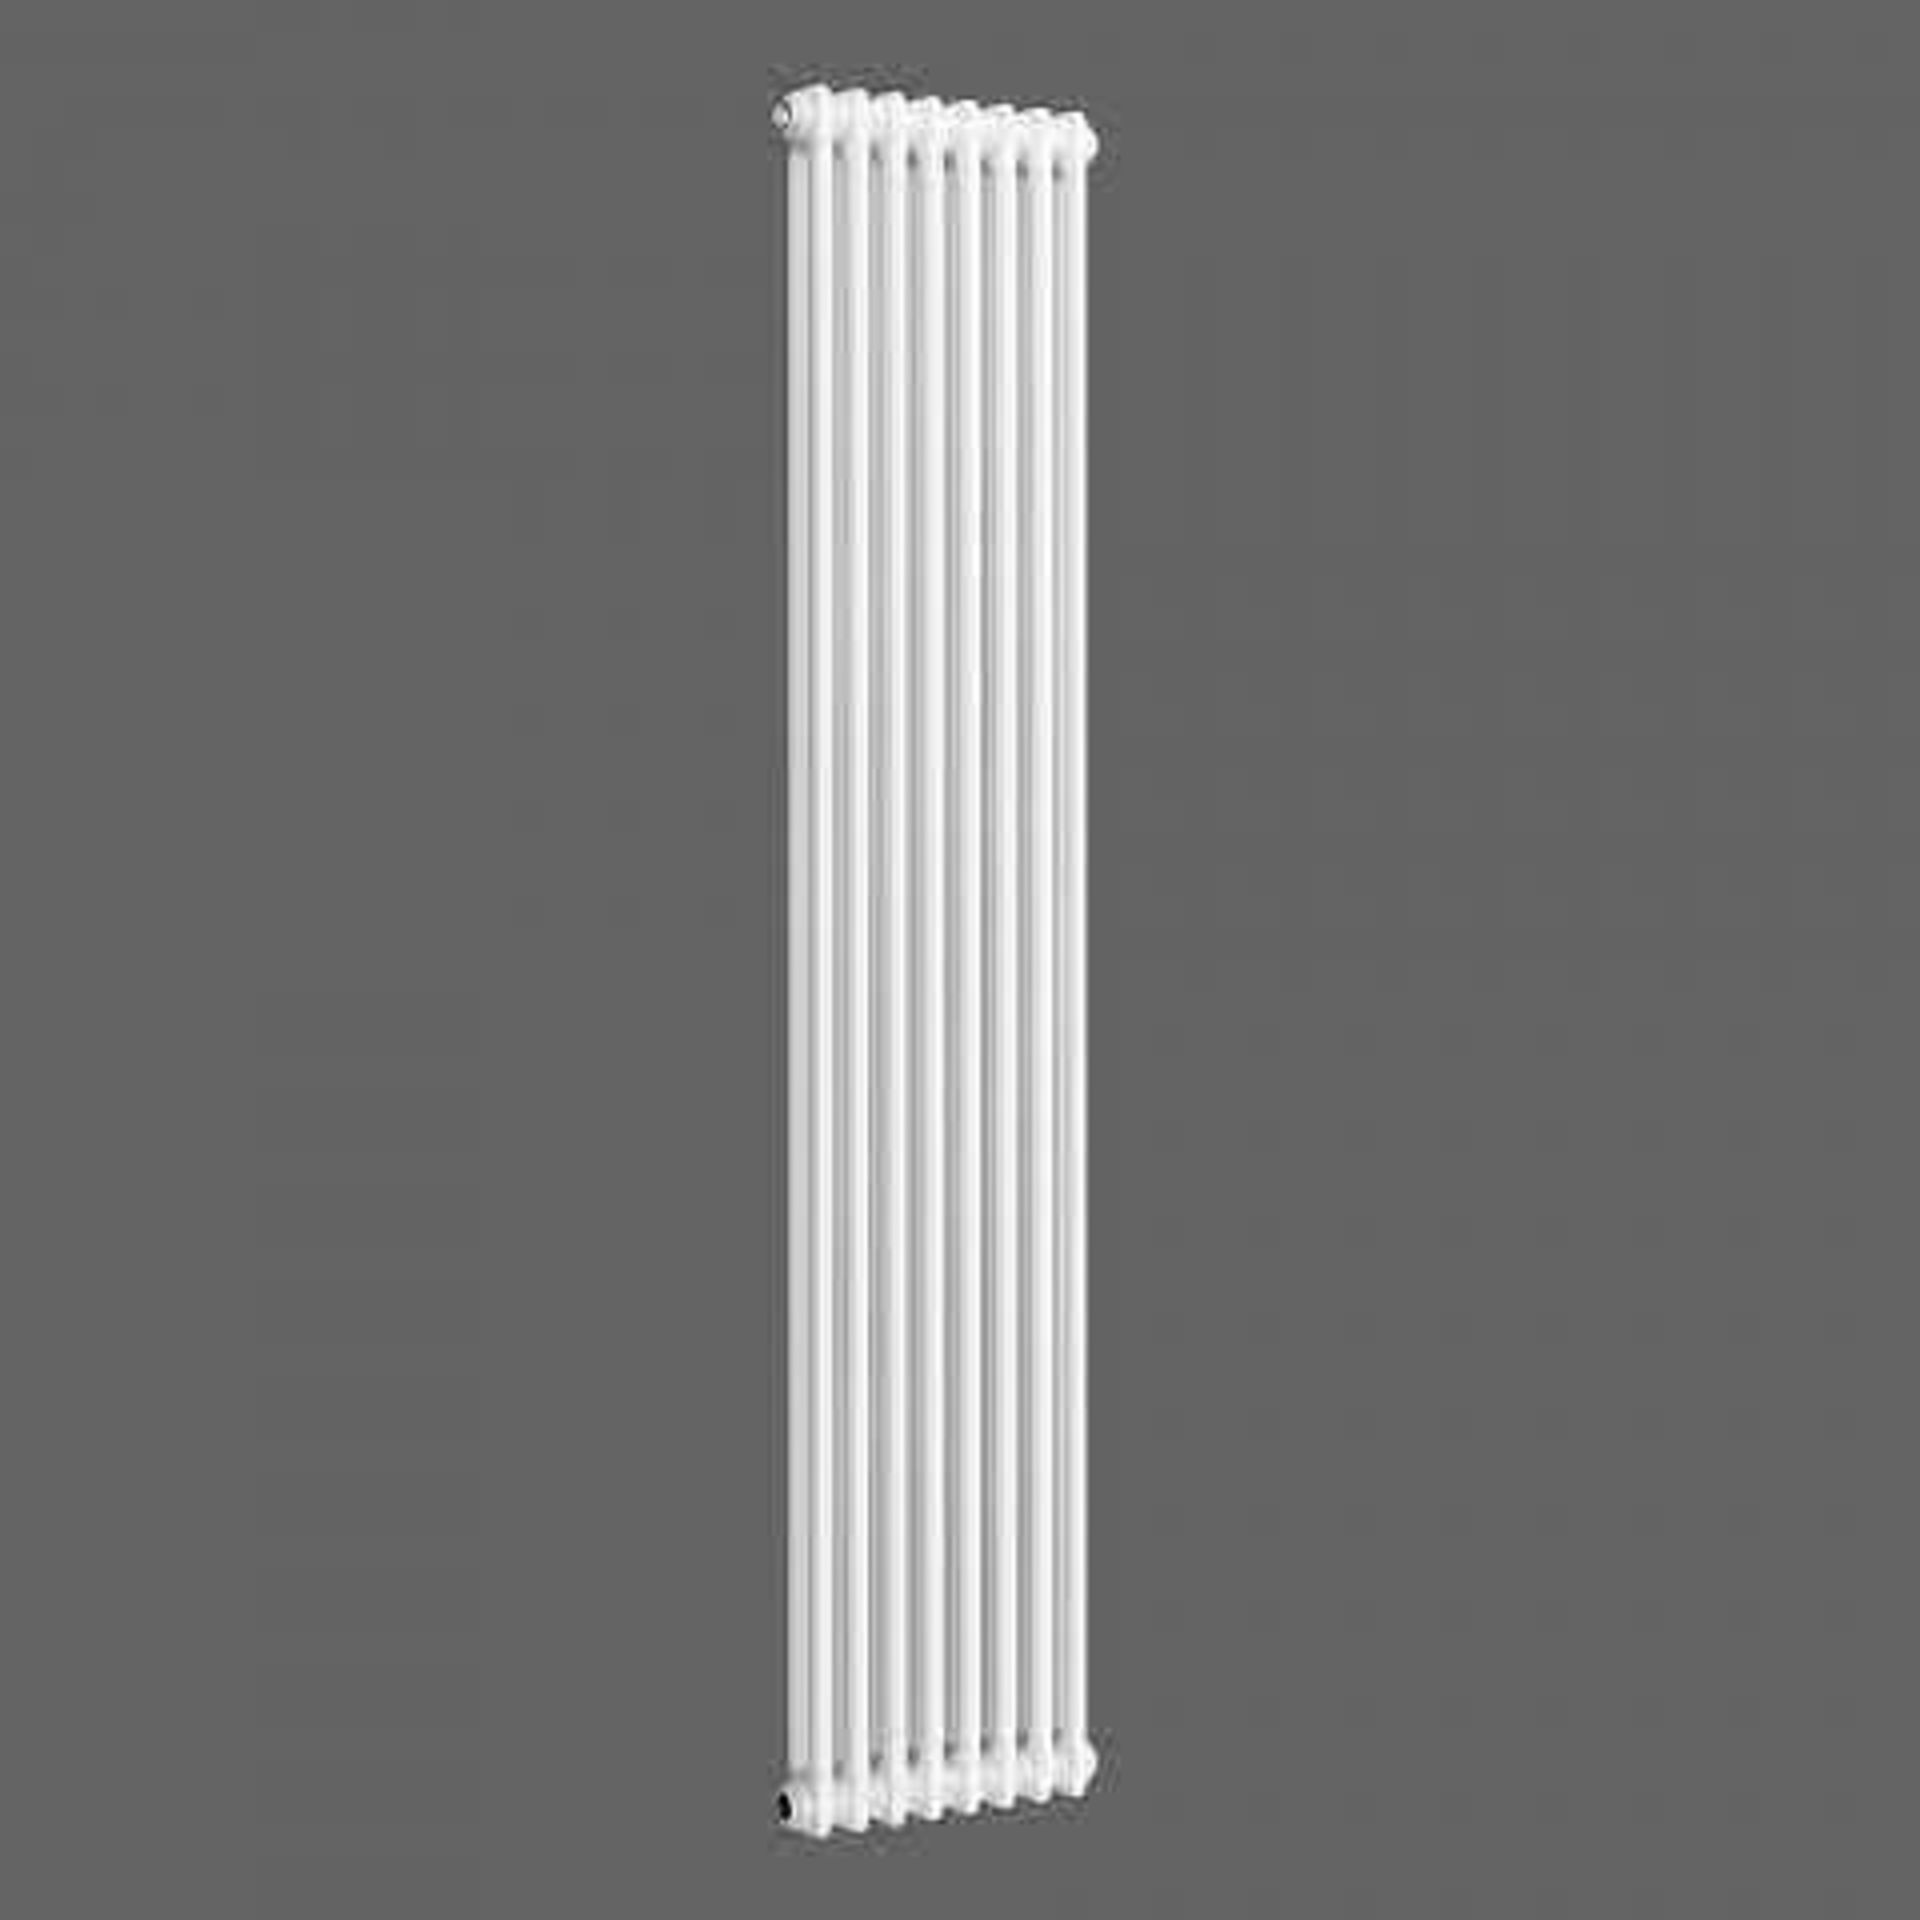 (P4) 1800x380mm White Double Panel Vertical Colosseum Radiator - Roma Premium. RRP £255.99. - Image 2 of 5